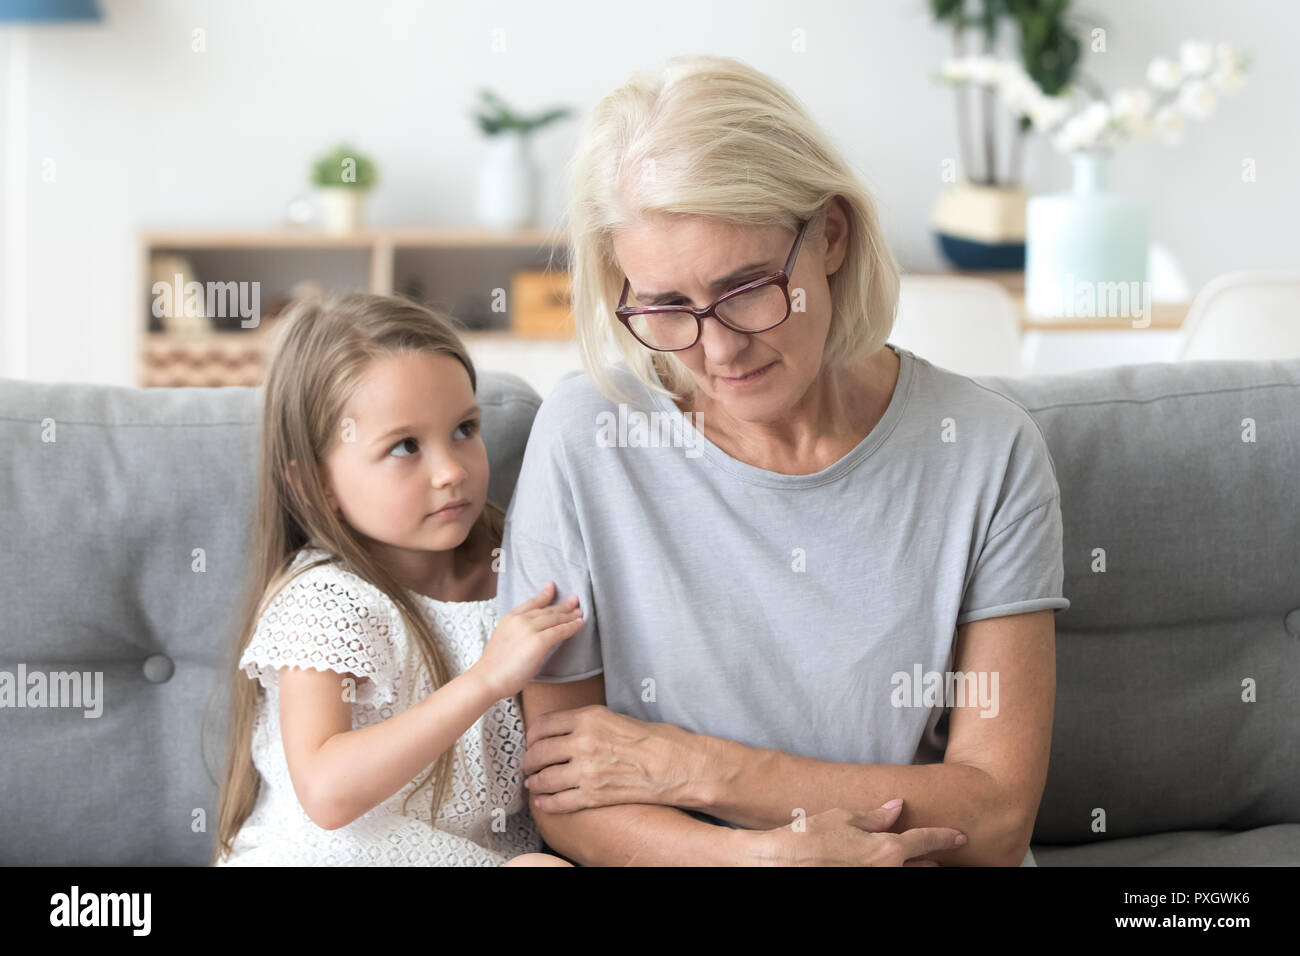 Linda nieta abuela triste abrazo consolador en su hogar Foto de stock